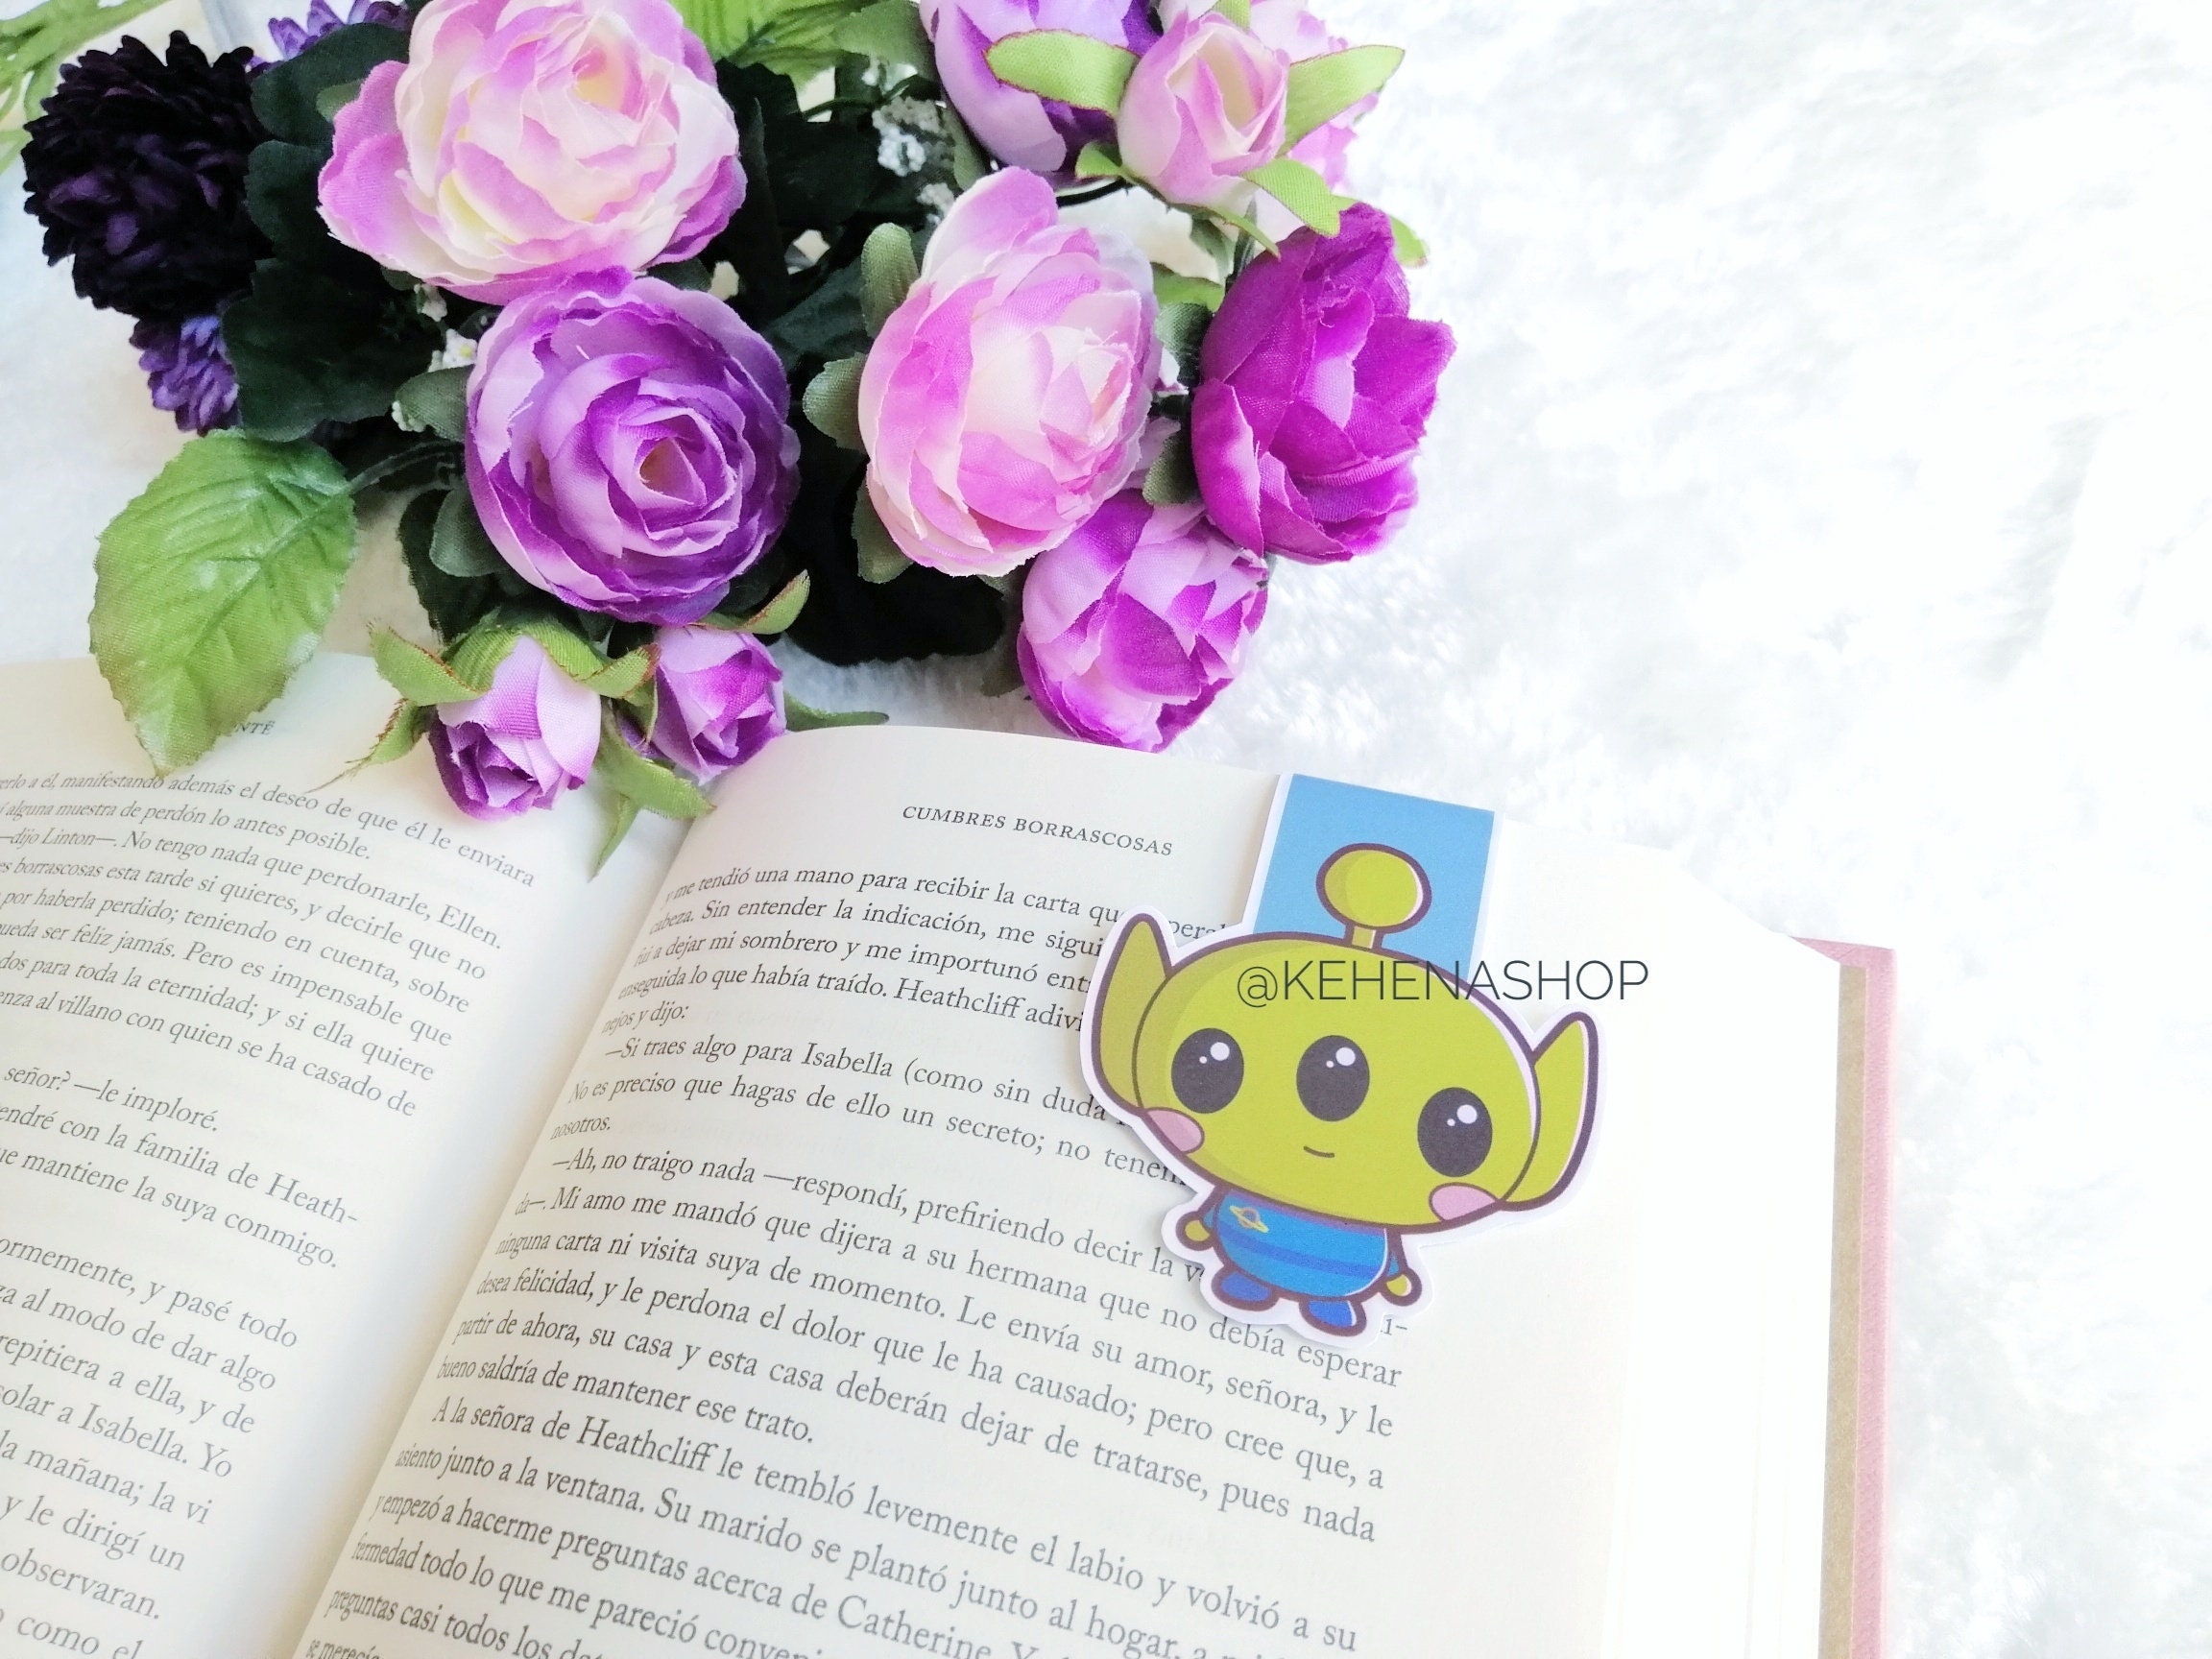 Bookmark Princesses Cross Stitch Pattern, Mini Pixel Princesses, Little  Mermaid, Snow, Fairytale Xstitch, Reader Library, Classic Book, 182 